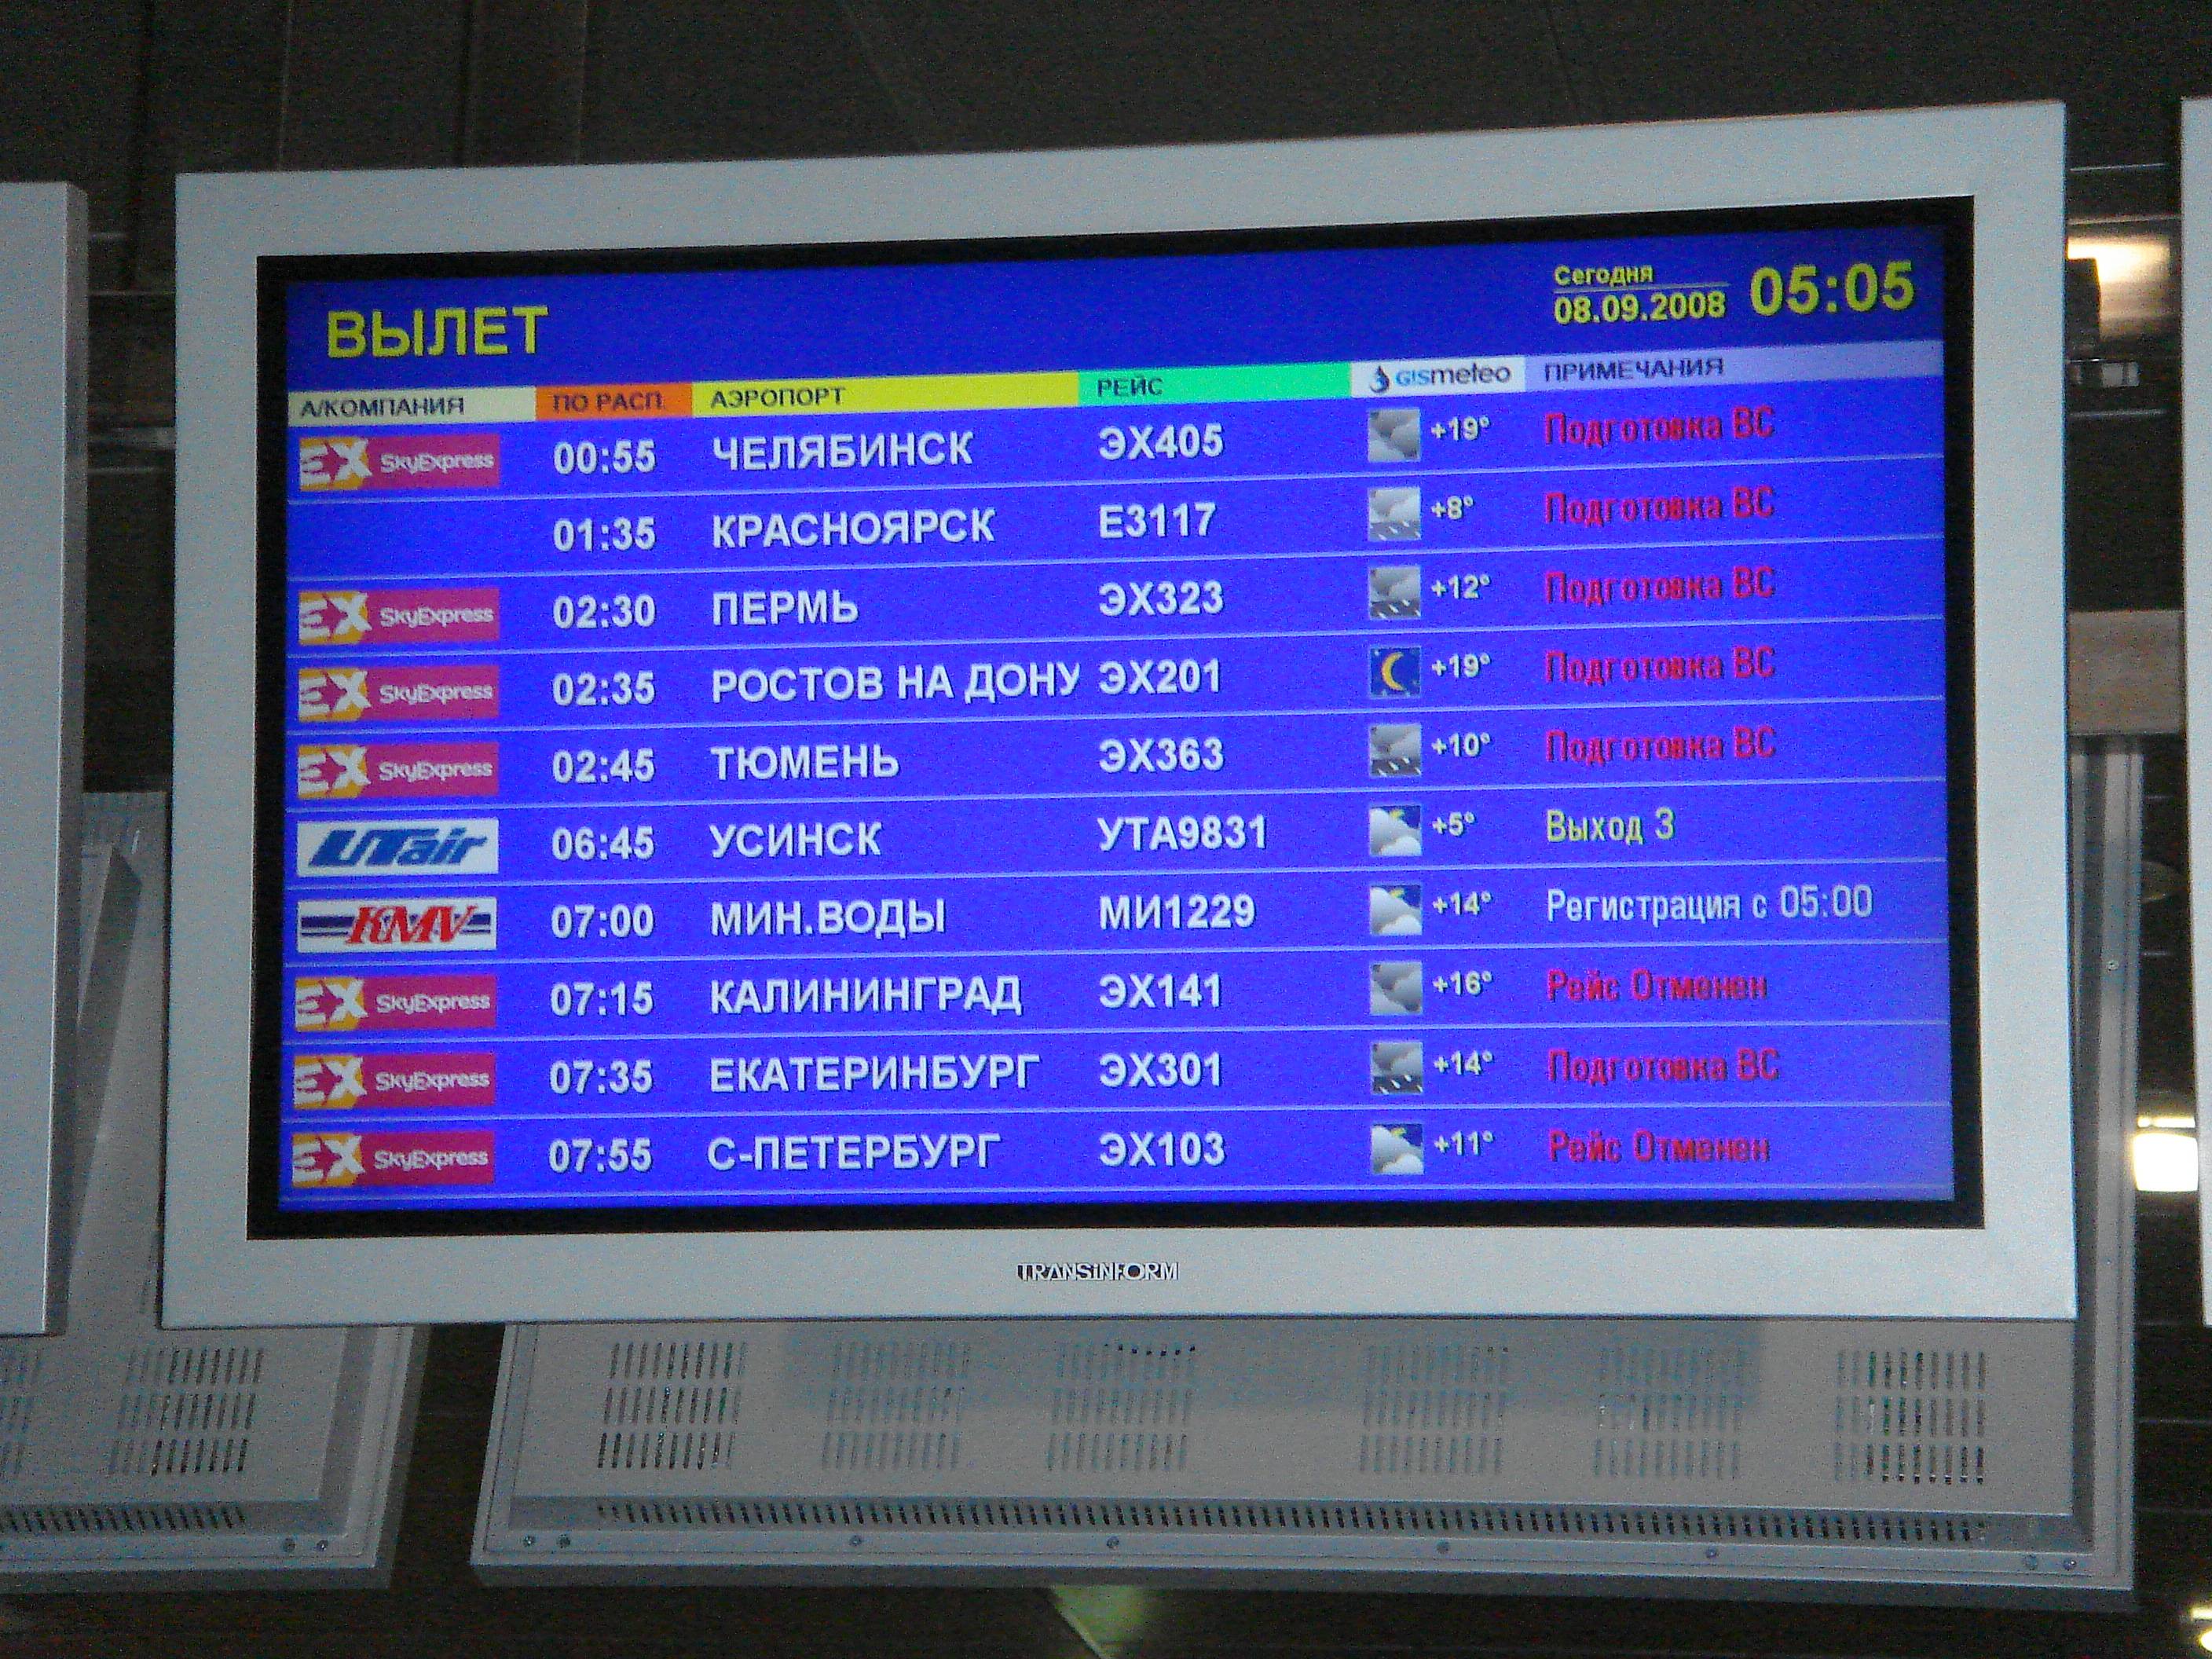 Онлайн табло прилетов самолетов в аэропорт емельяново (kja) на сегодня